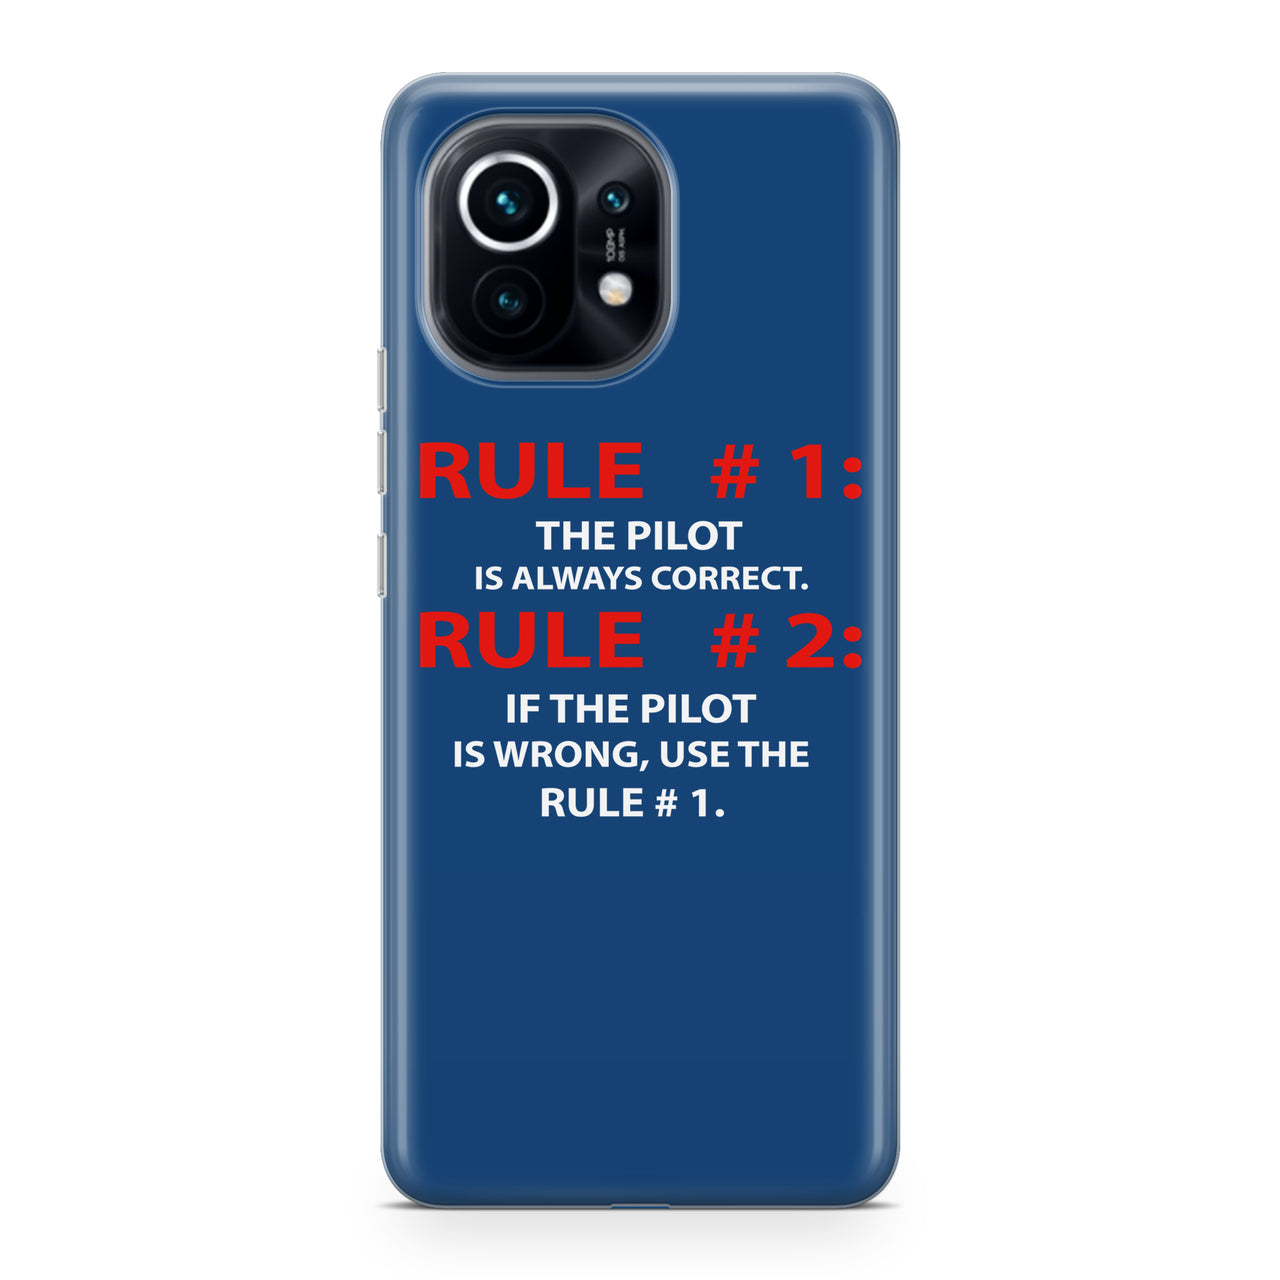 Rule 1 - Pilot is Always Correct Designed Xiaomi Cases